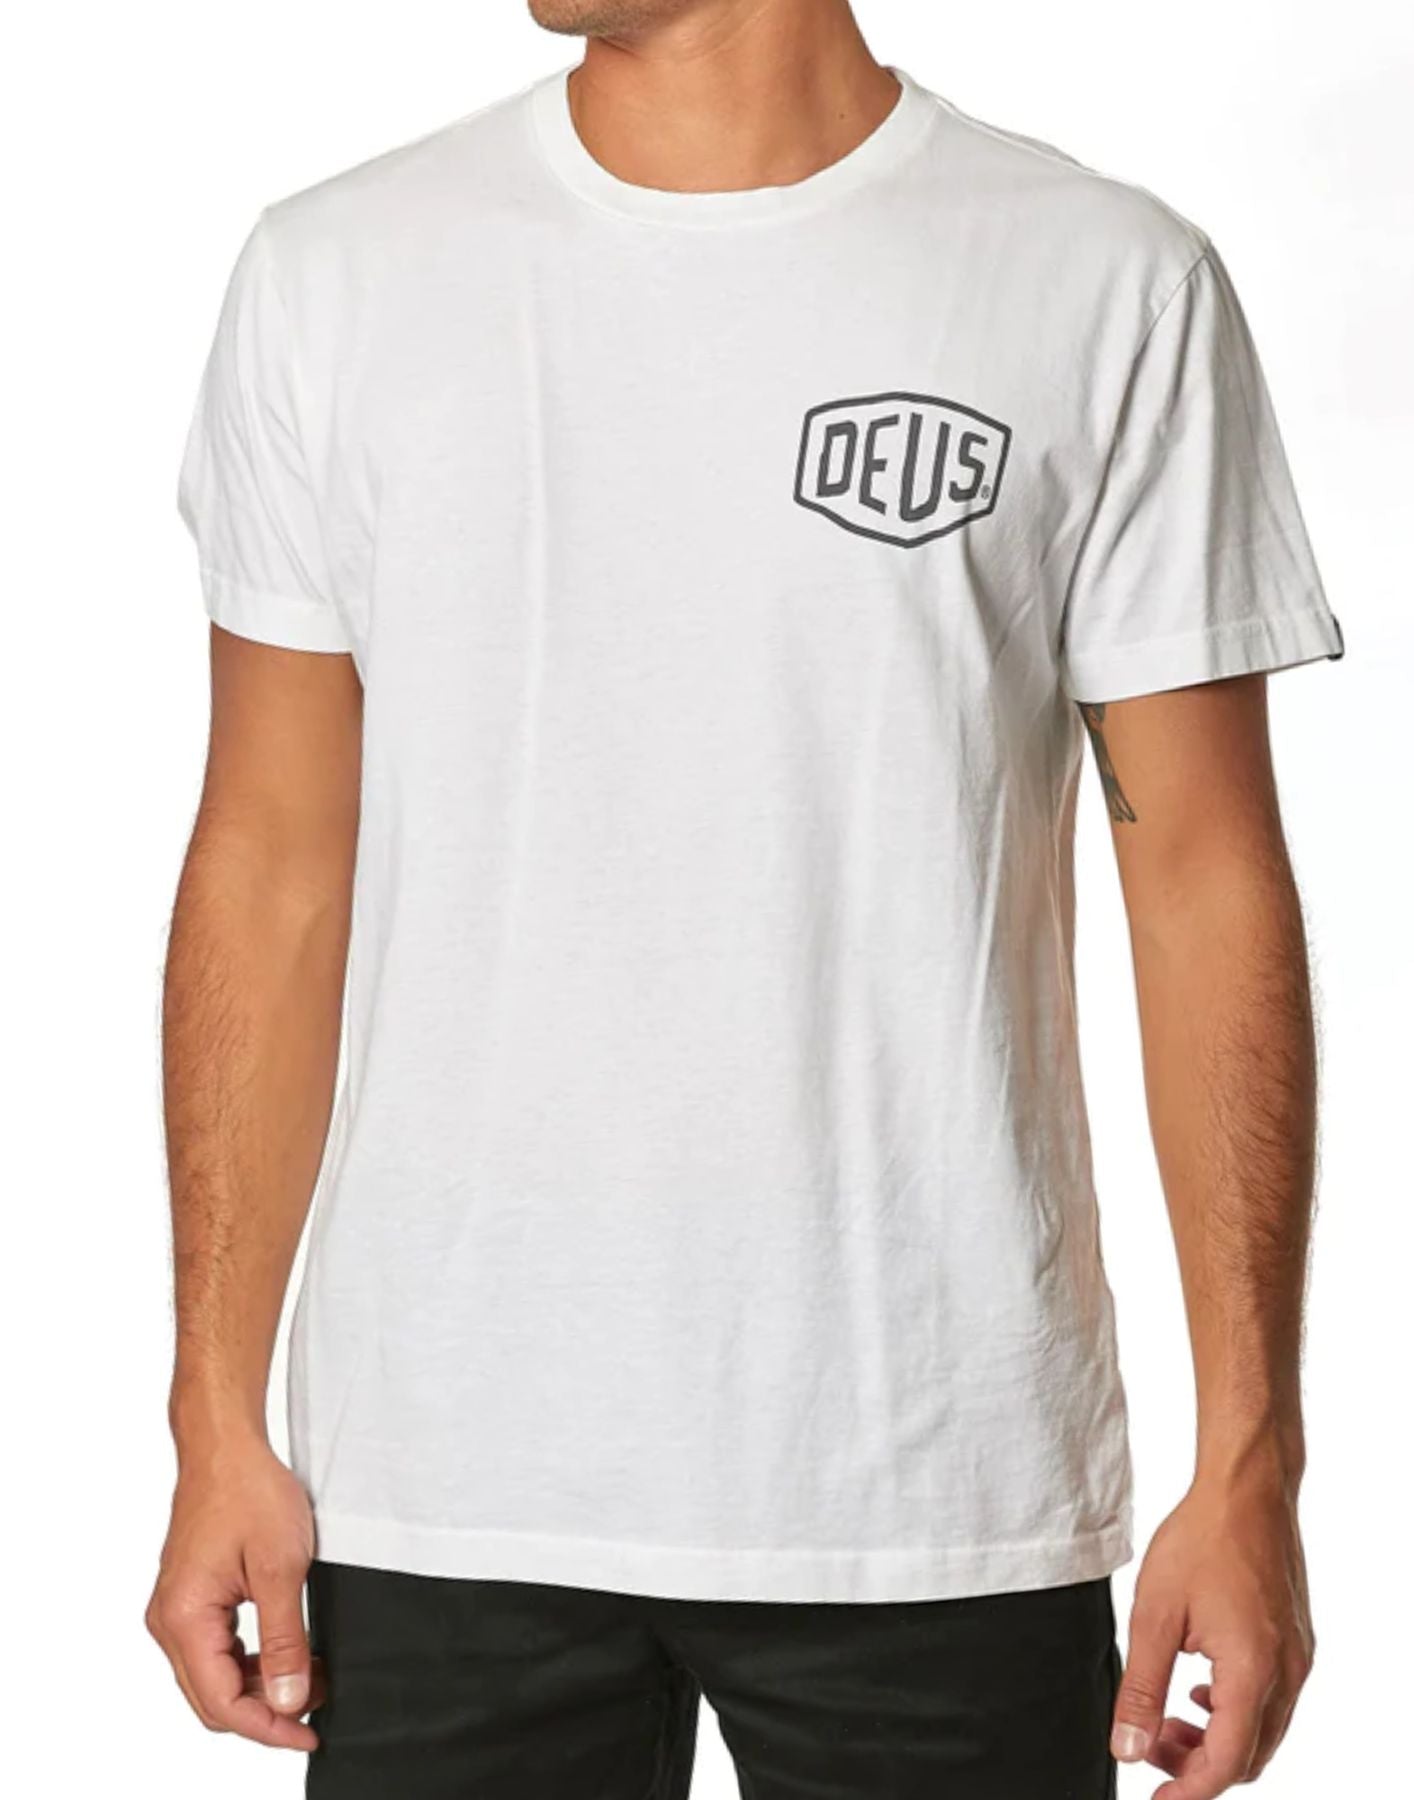 T-shirt da uomo DMW41808D MILANO WHITE Deus Ex Machina